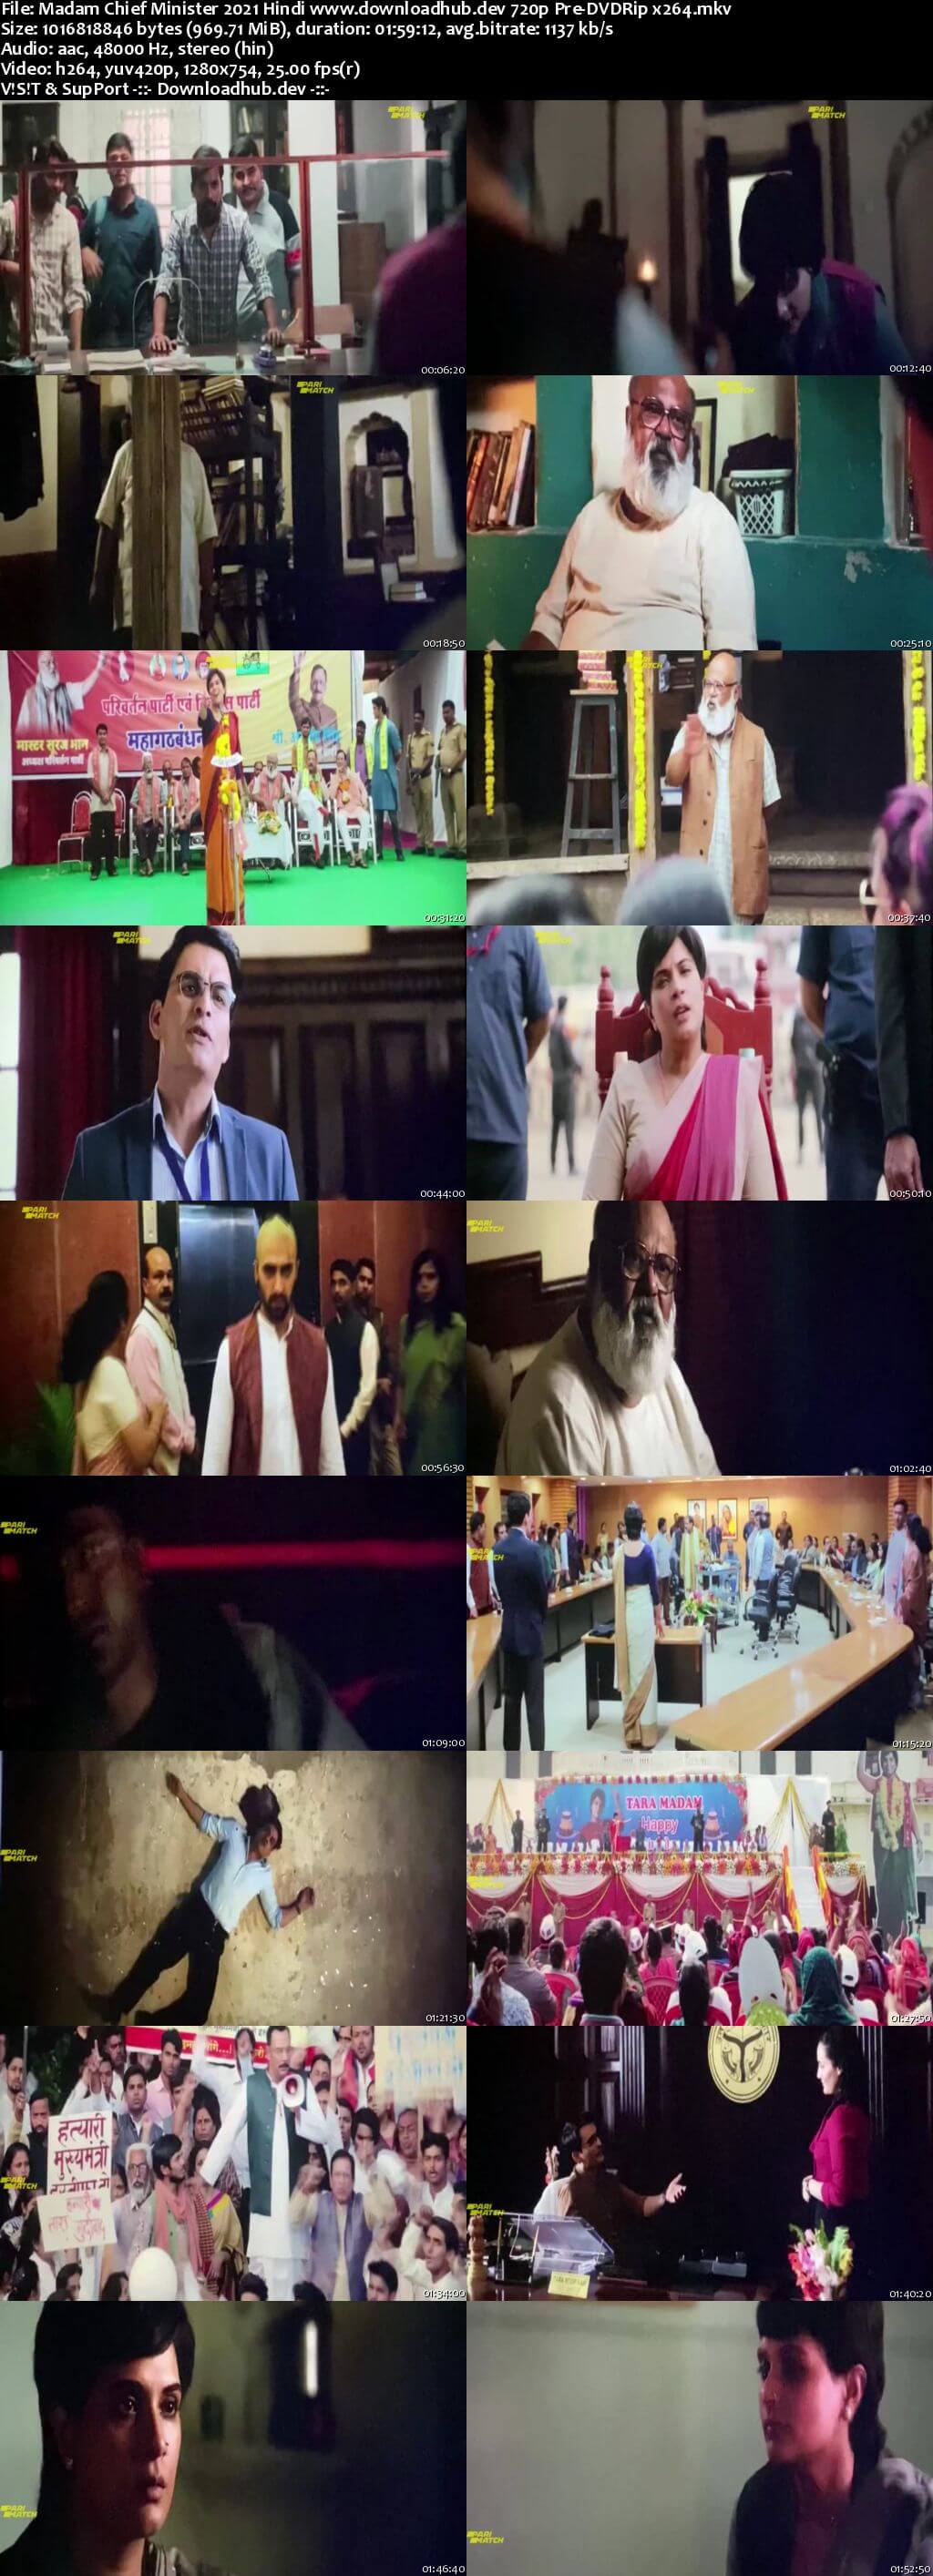 Madam Chief Minister 2021 Hindi 720p 480p Pre-DVDRip x264